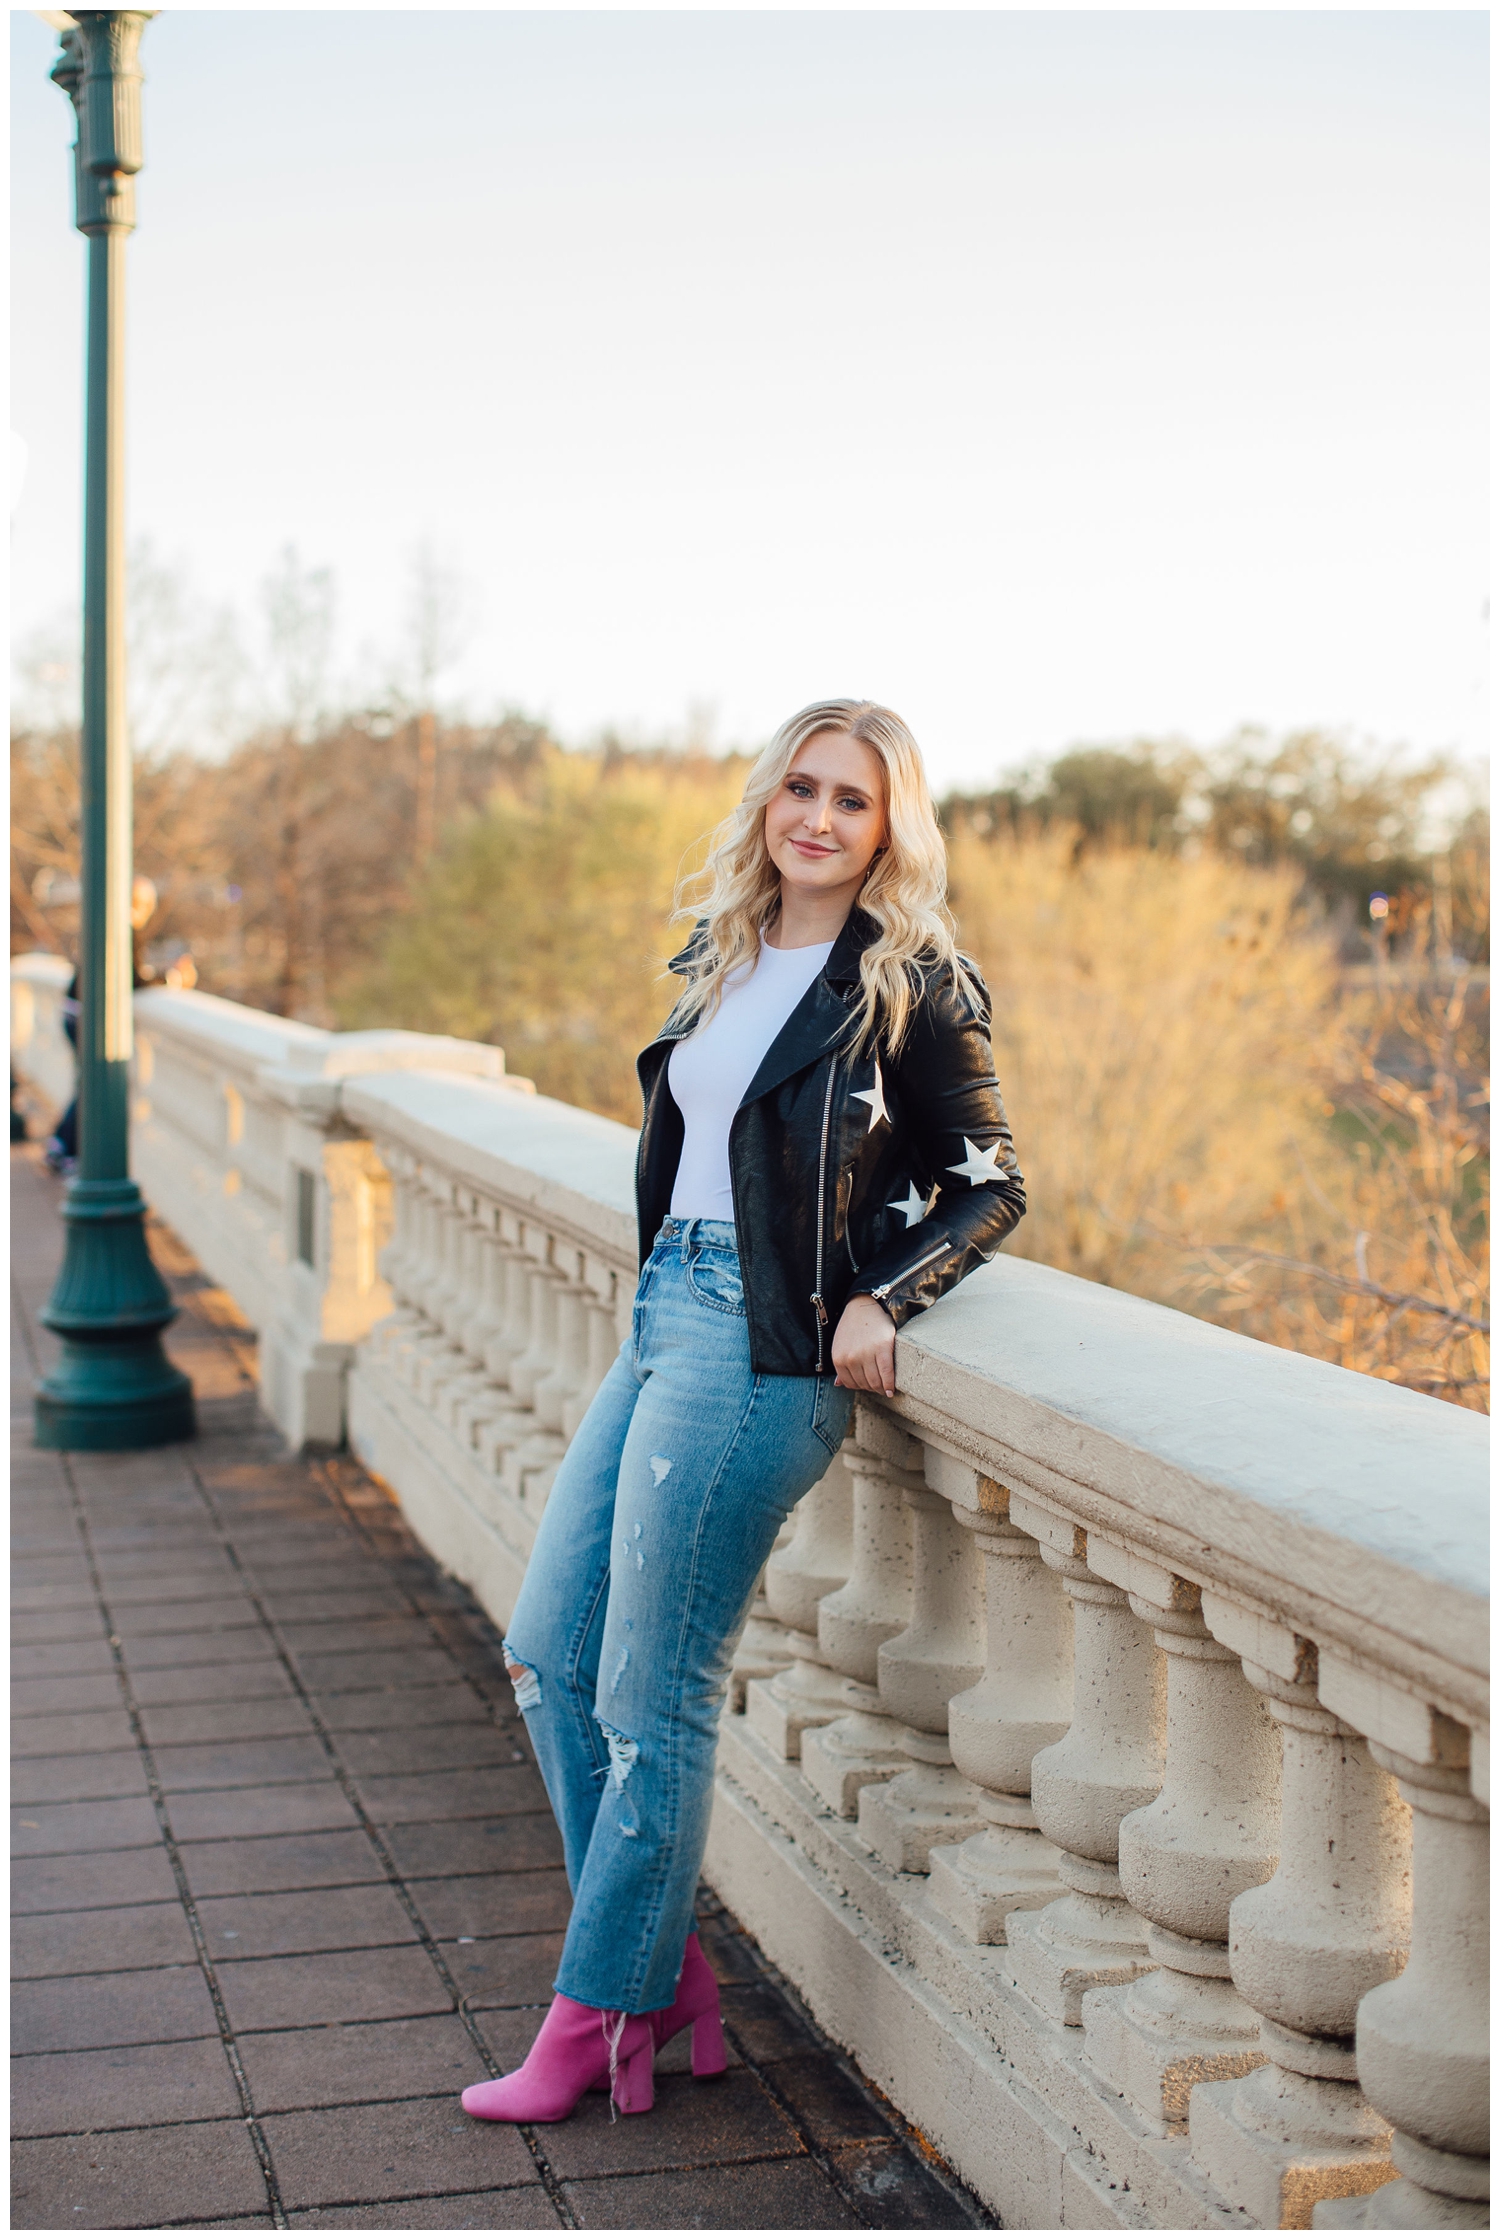 high school senior standing on Sabine Street bridge in jeans and black jacket with stars